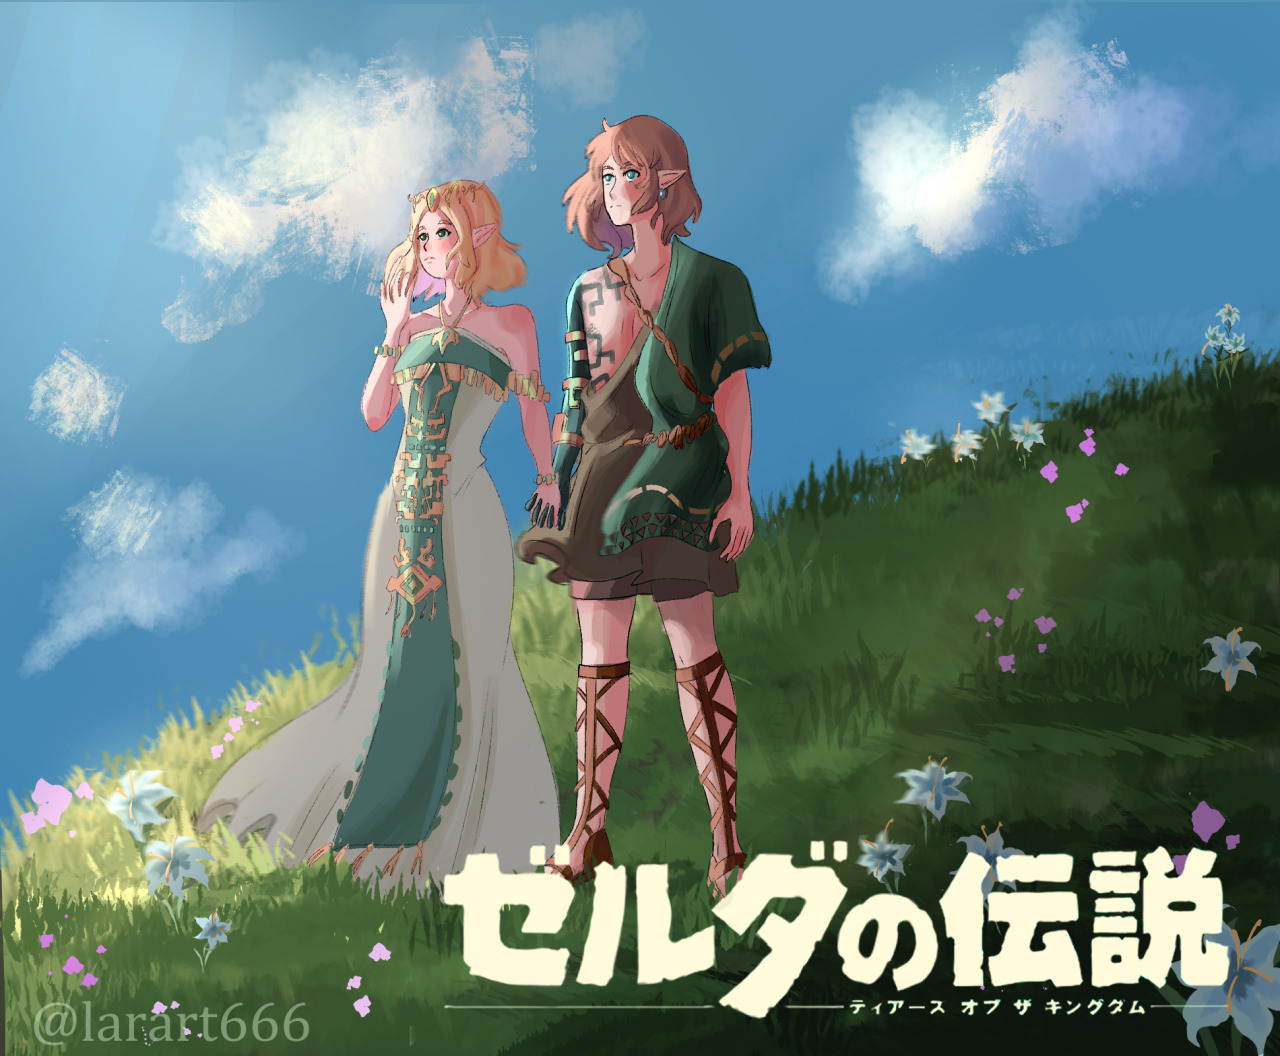 Lost Woods from The Legend of Zelda Ocarina of Time #Zelda #Tloz